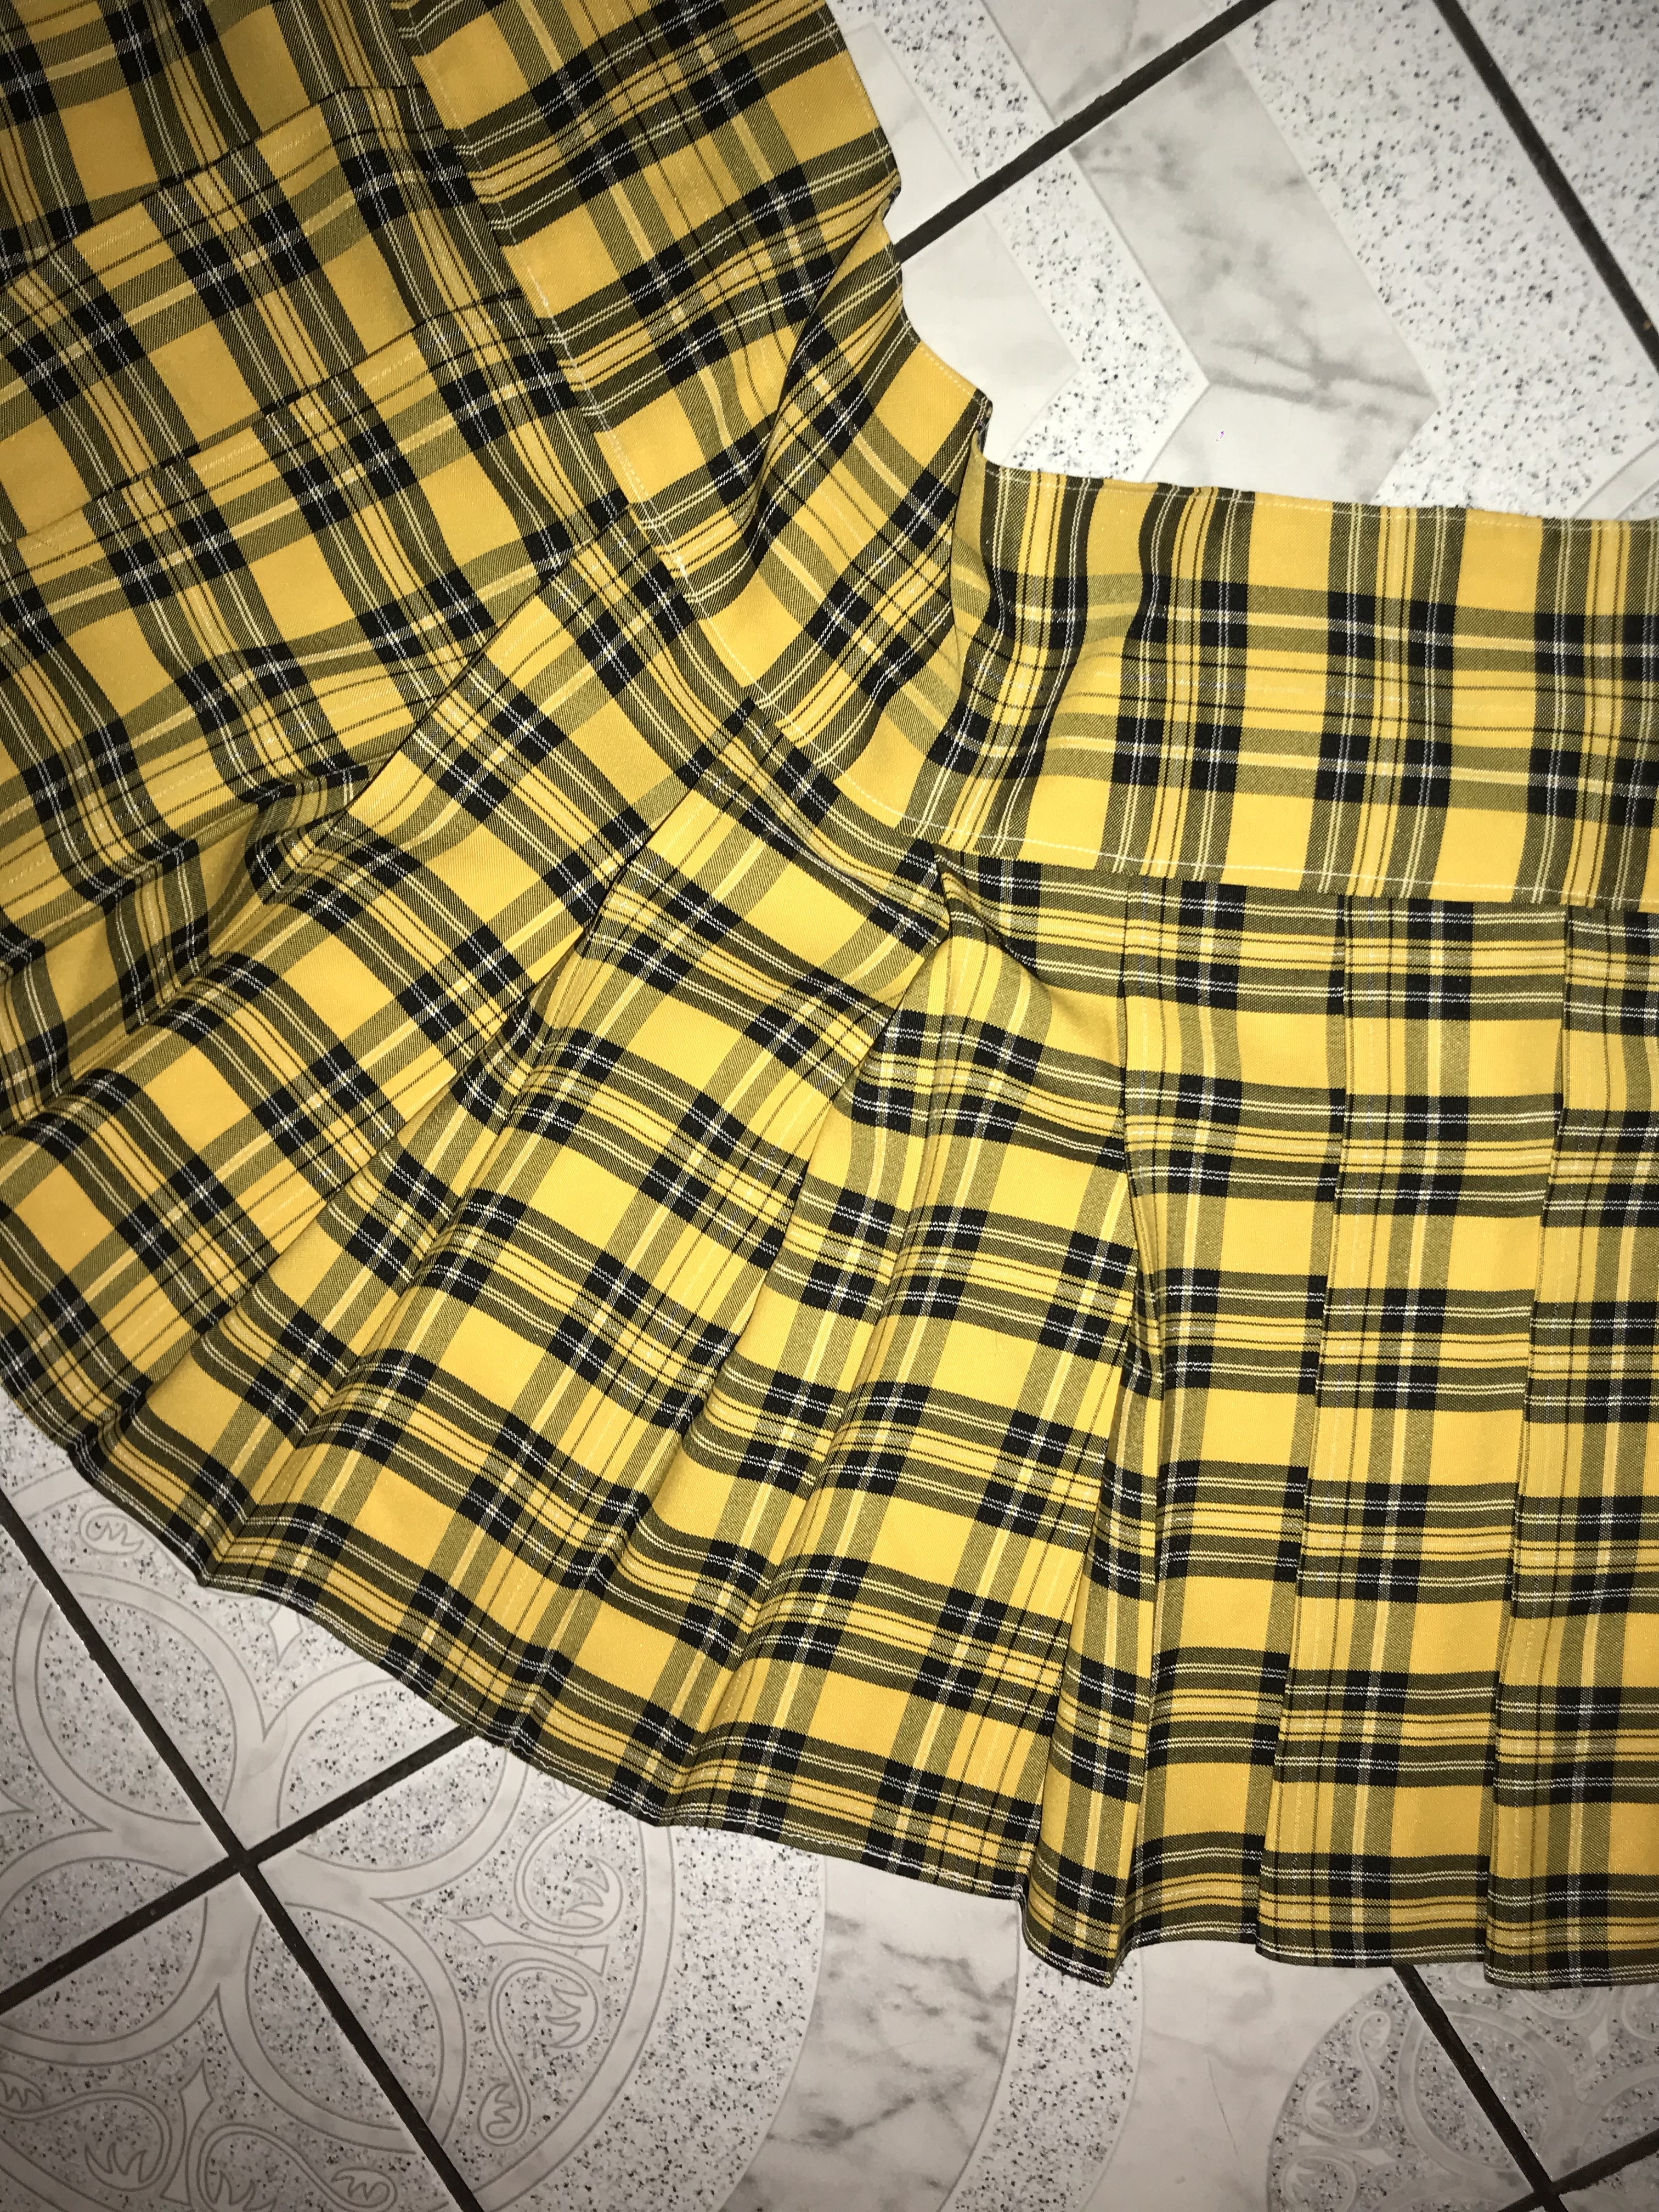 yellow plaid skirt clueless